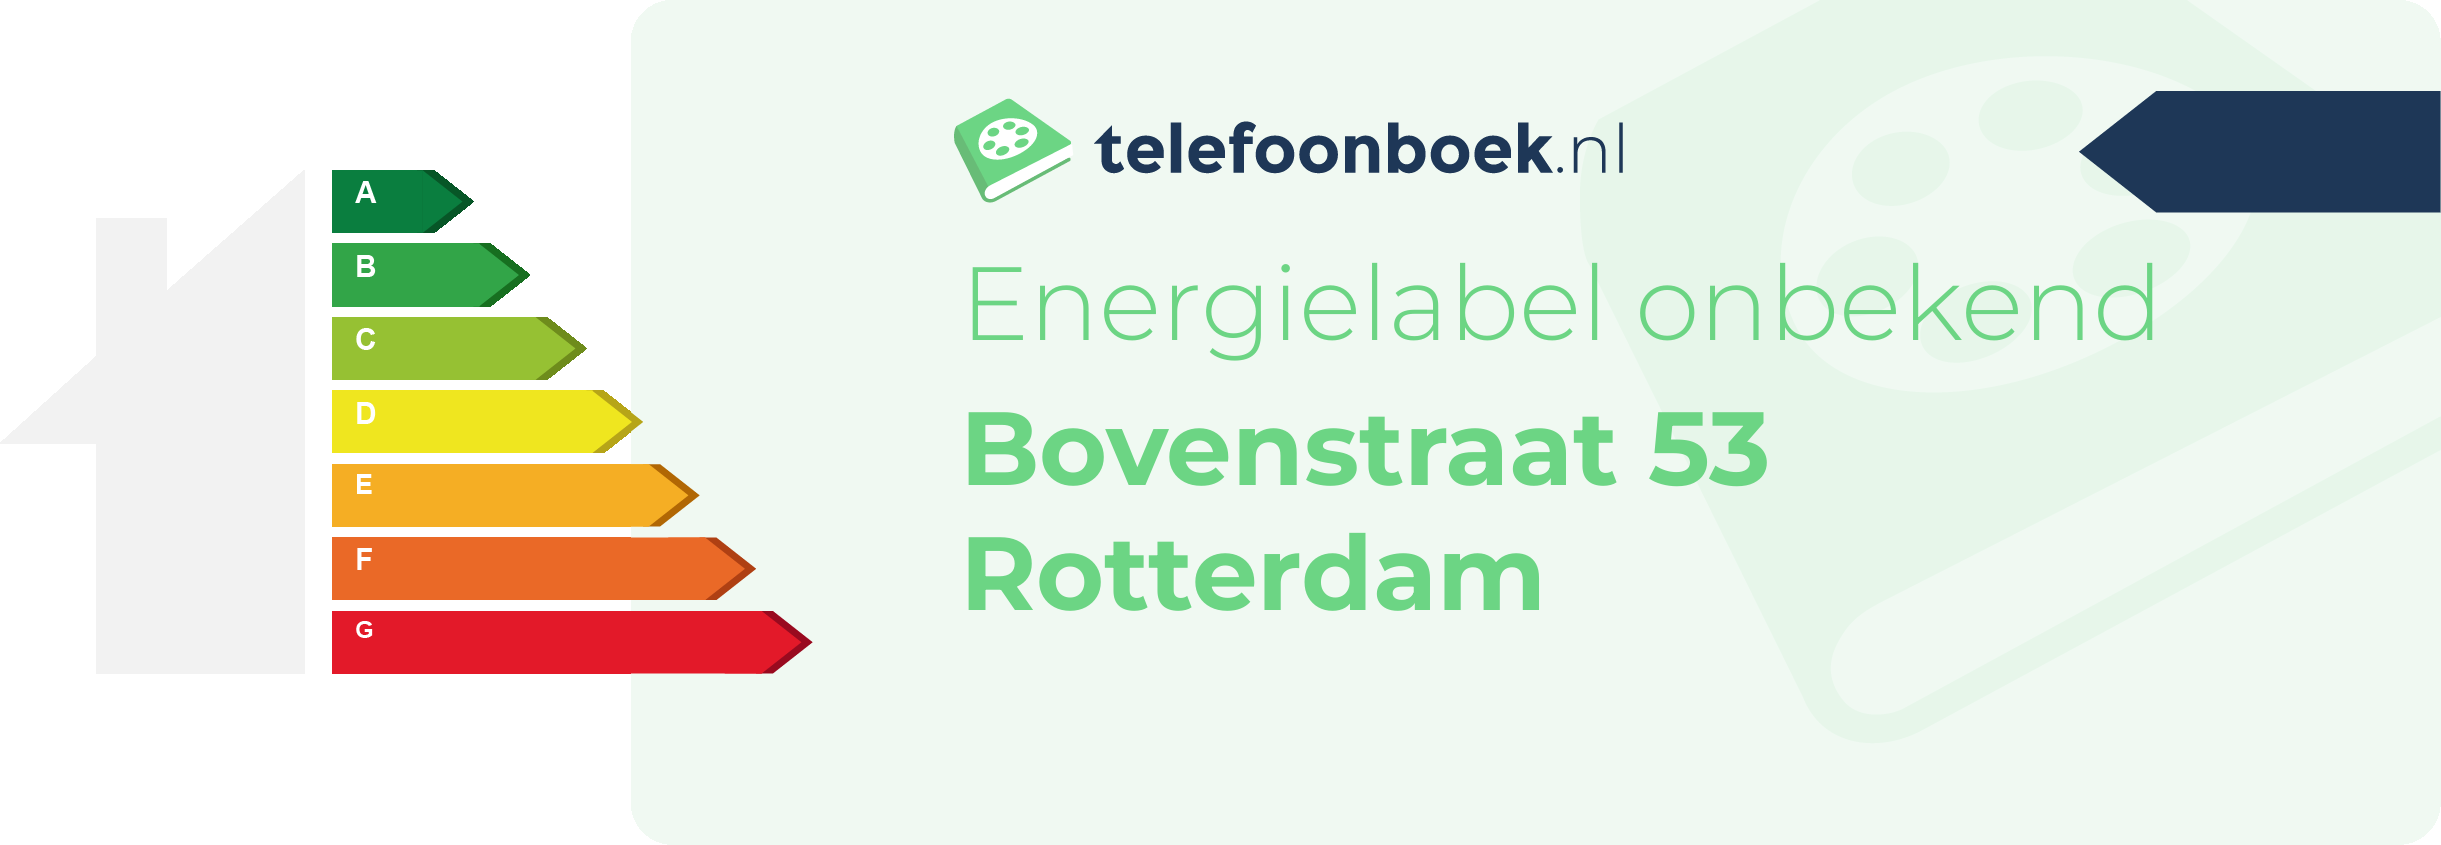 Energielabel Bovenstraat 53 Rotterdam